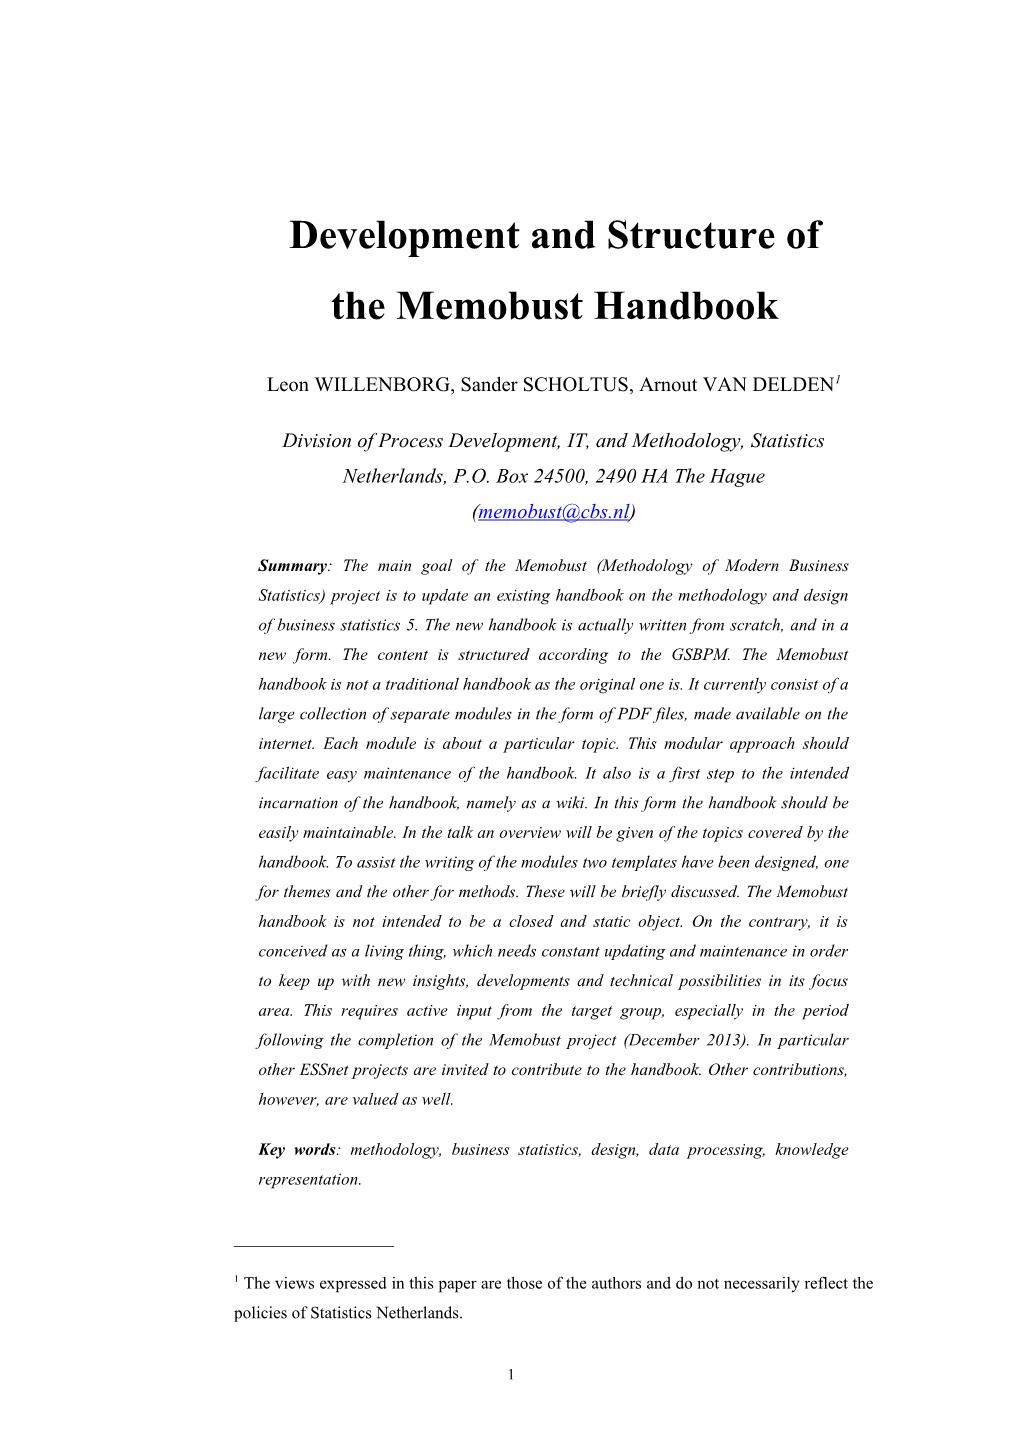 Development and Structure of the Memobust Handbook